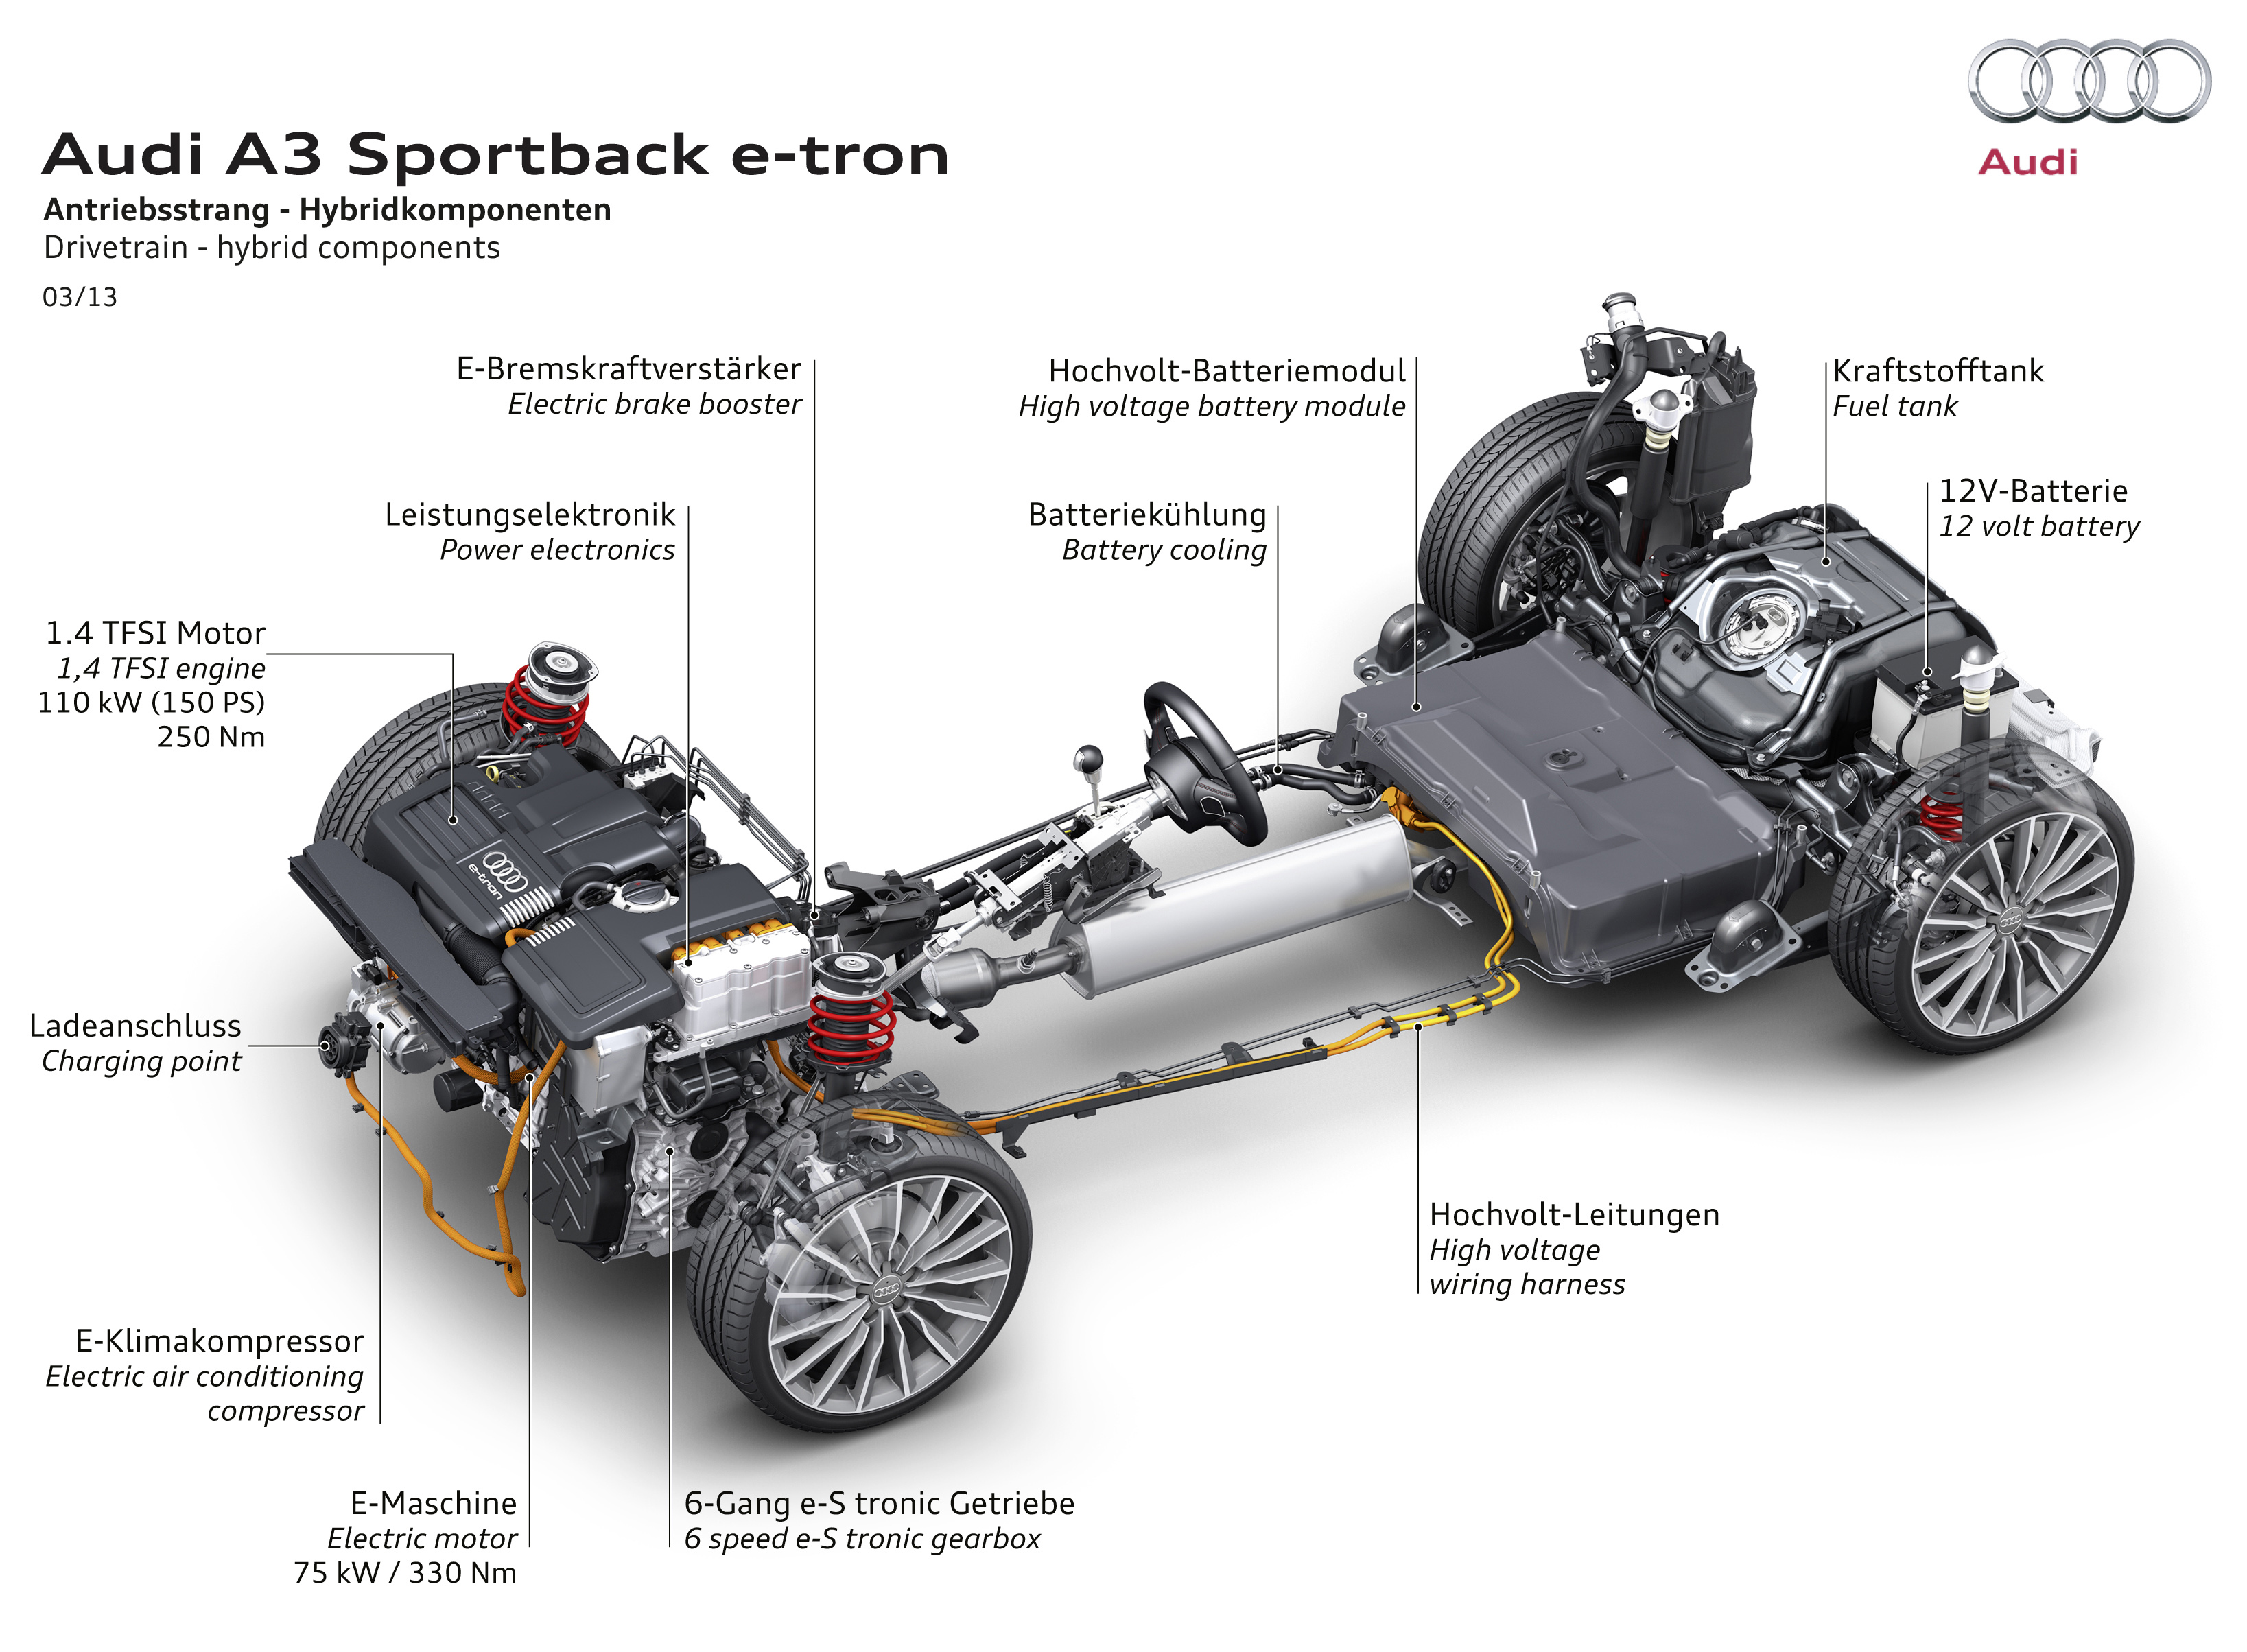 Audi A3 Sportback e-tron accessories 2016